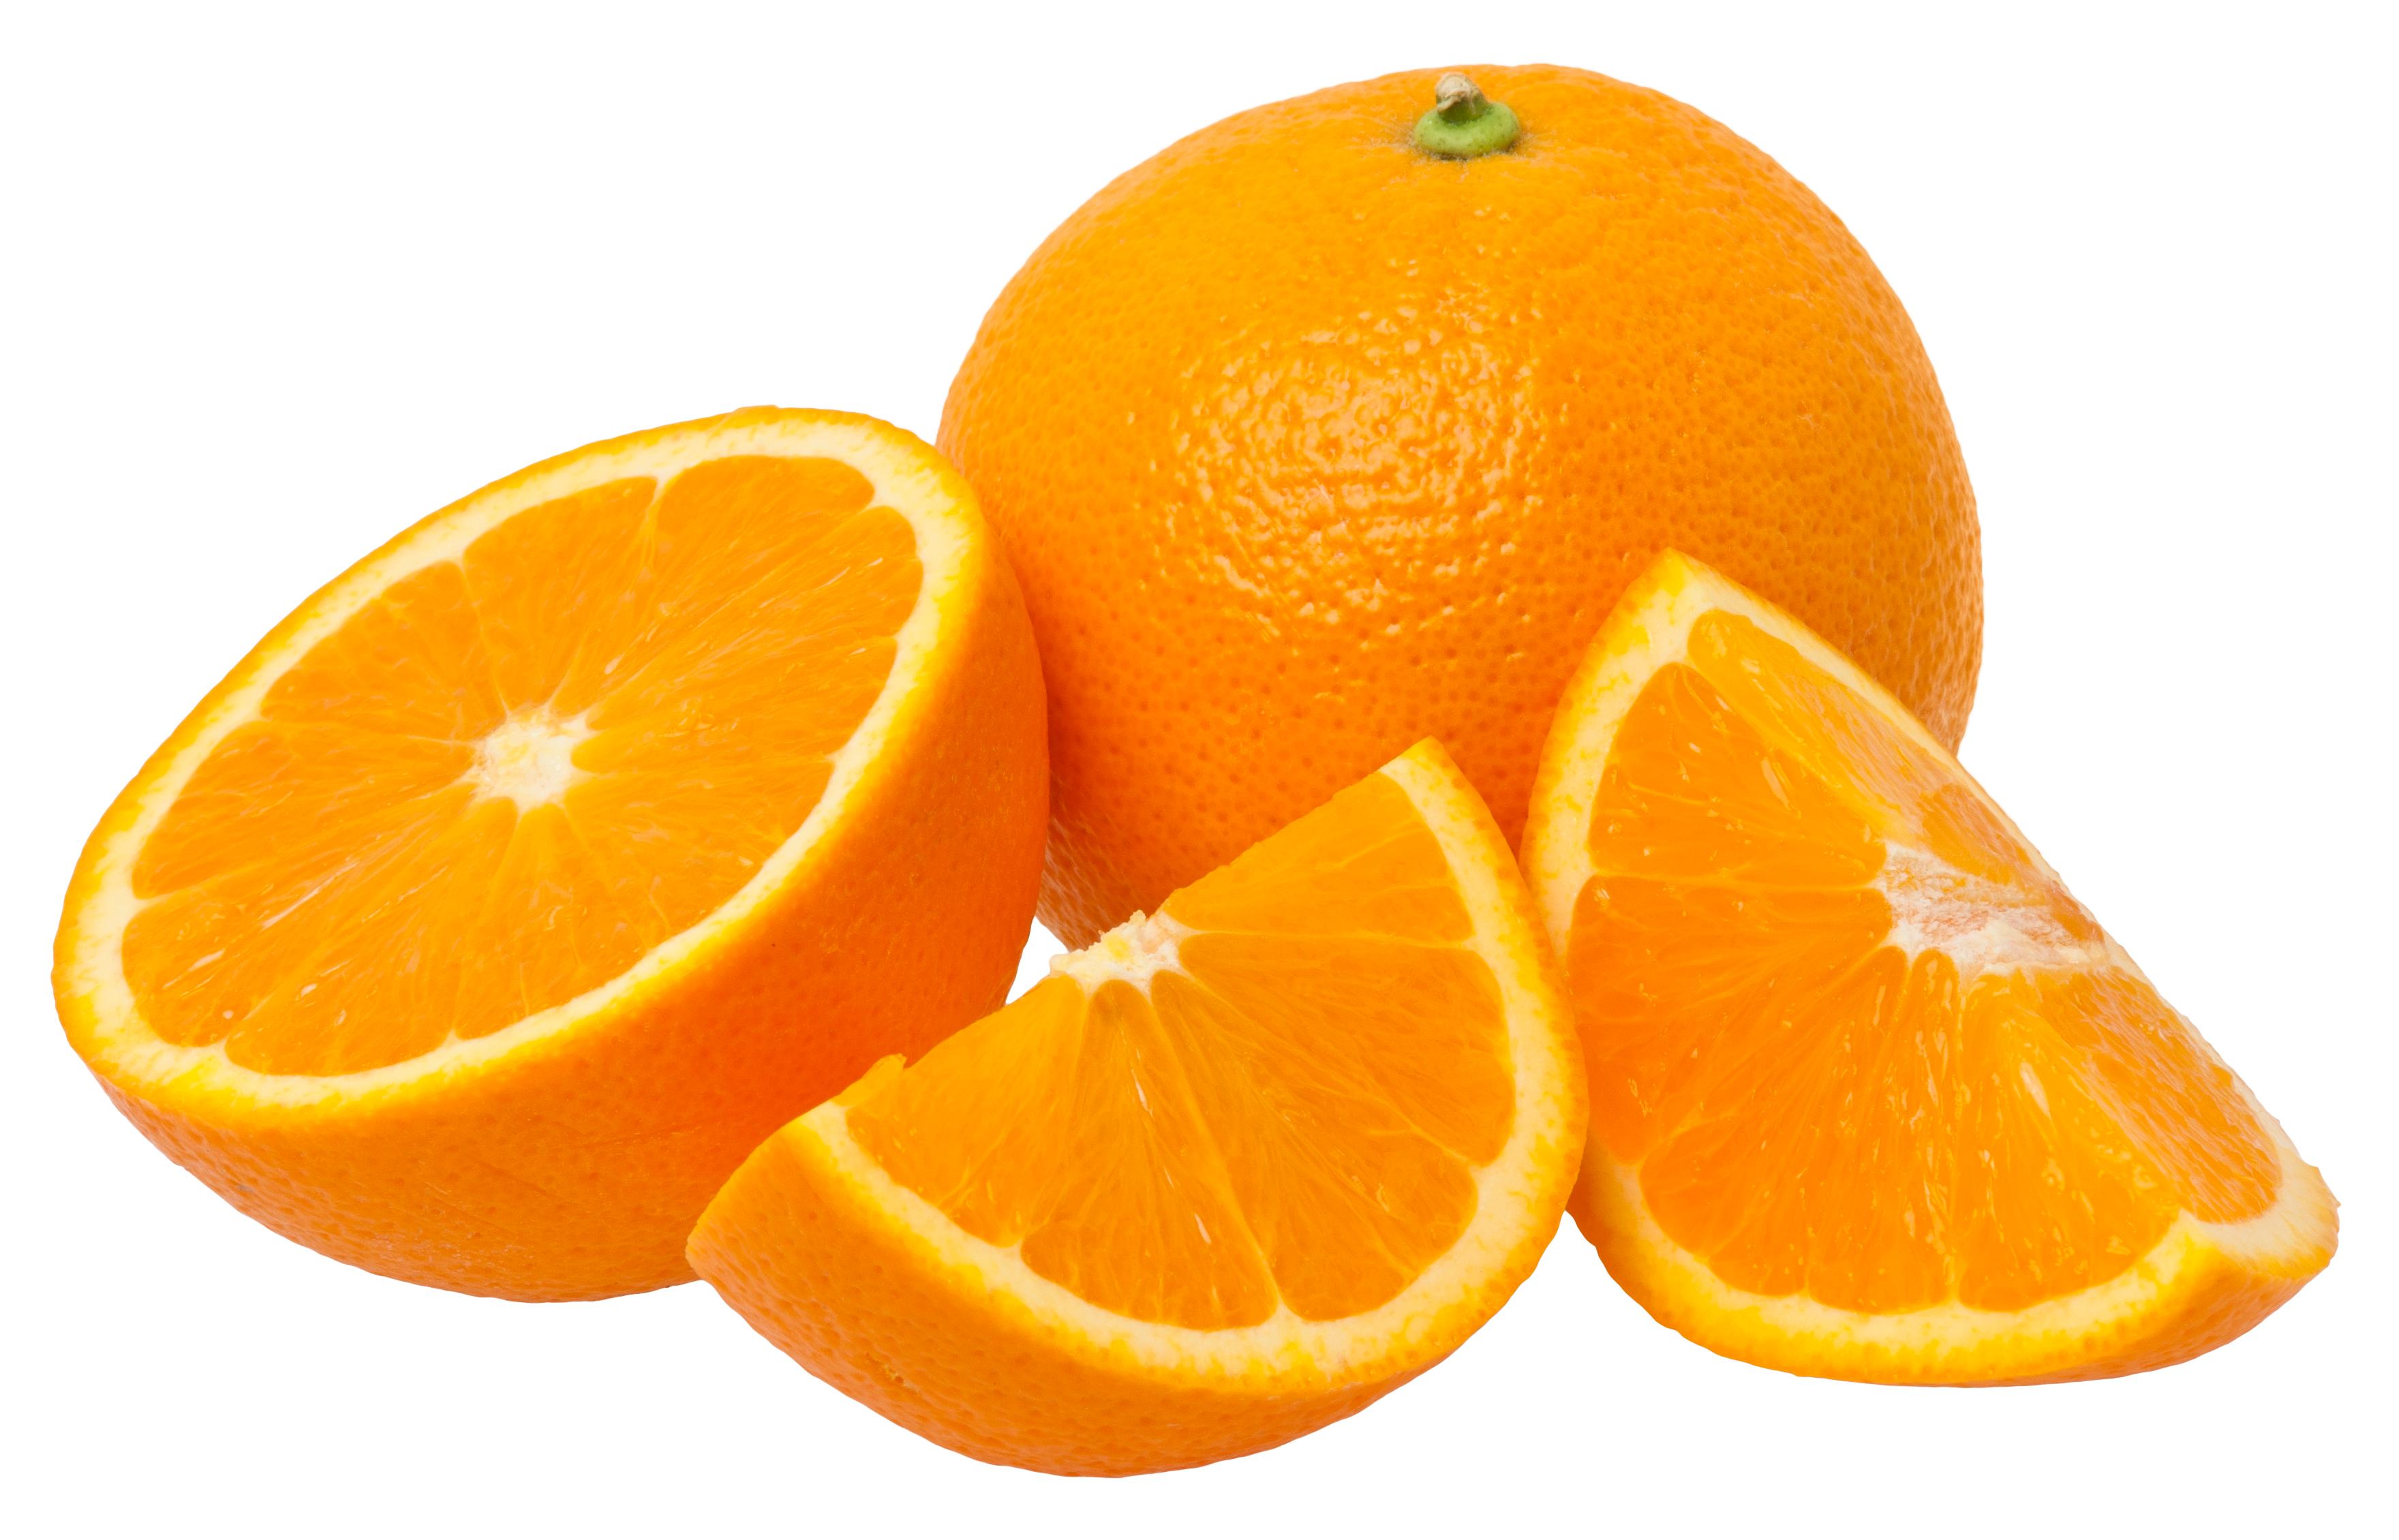 NaranDže su prepune antioksidansa i vitamina C - Avaz